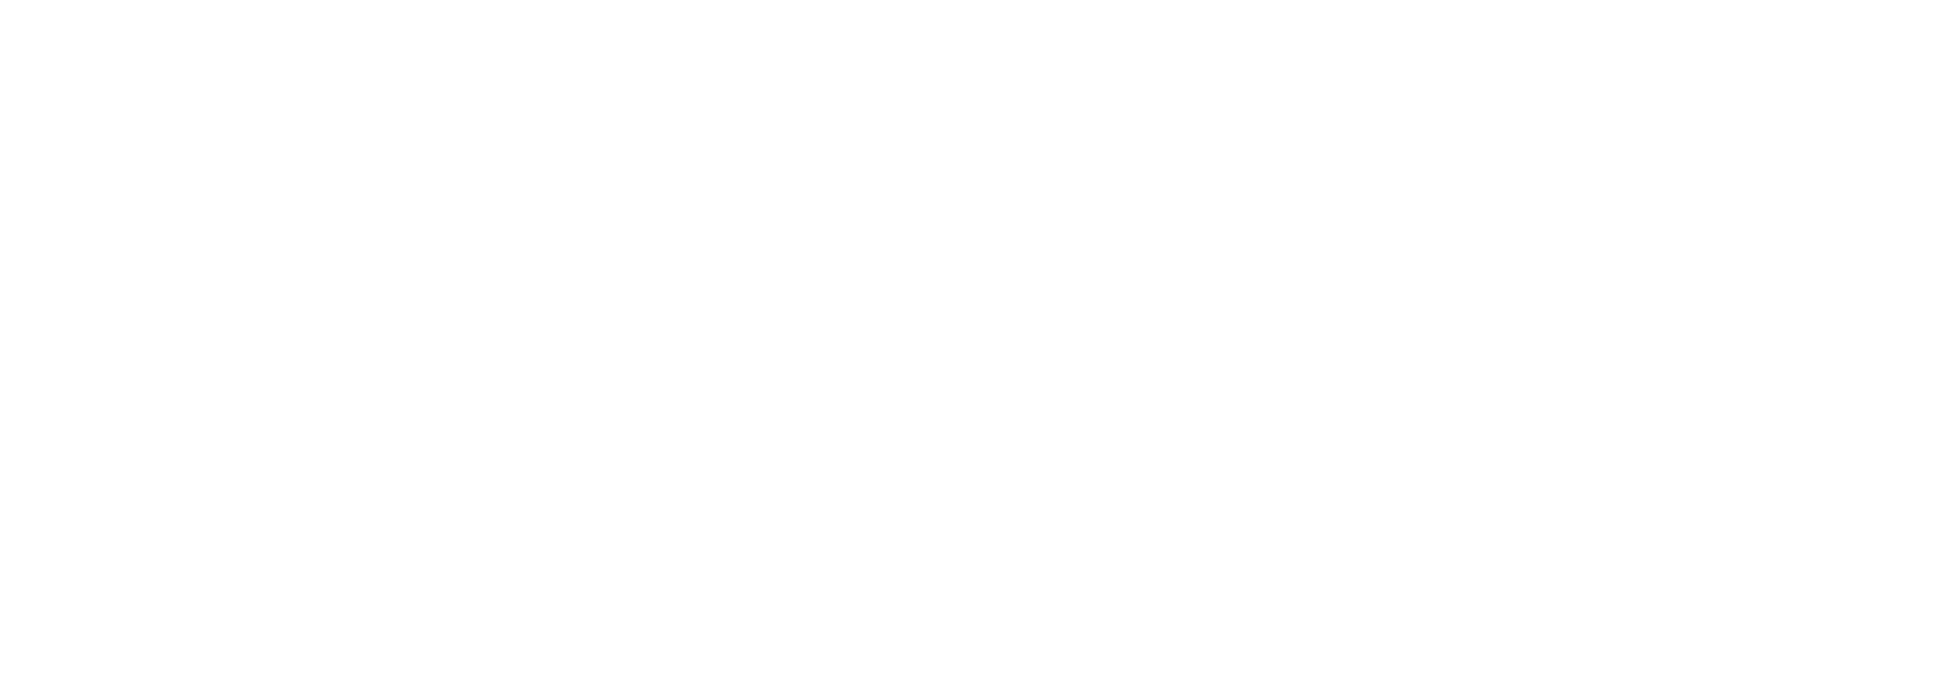 Bloomberg-Logo.png